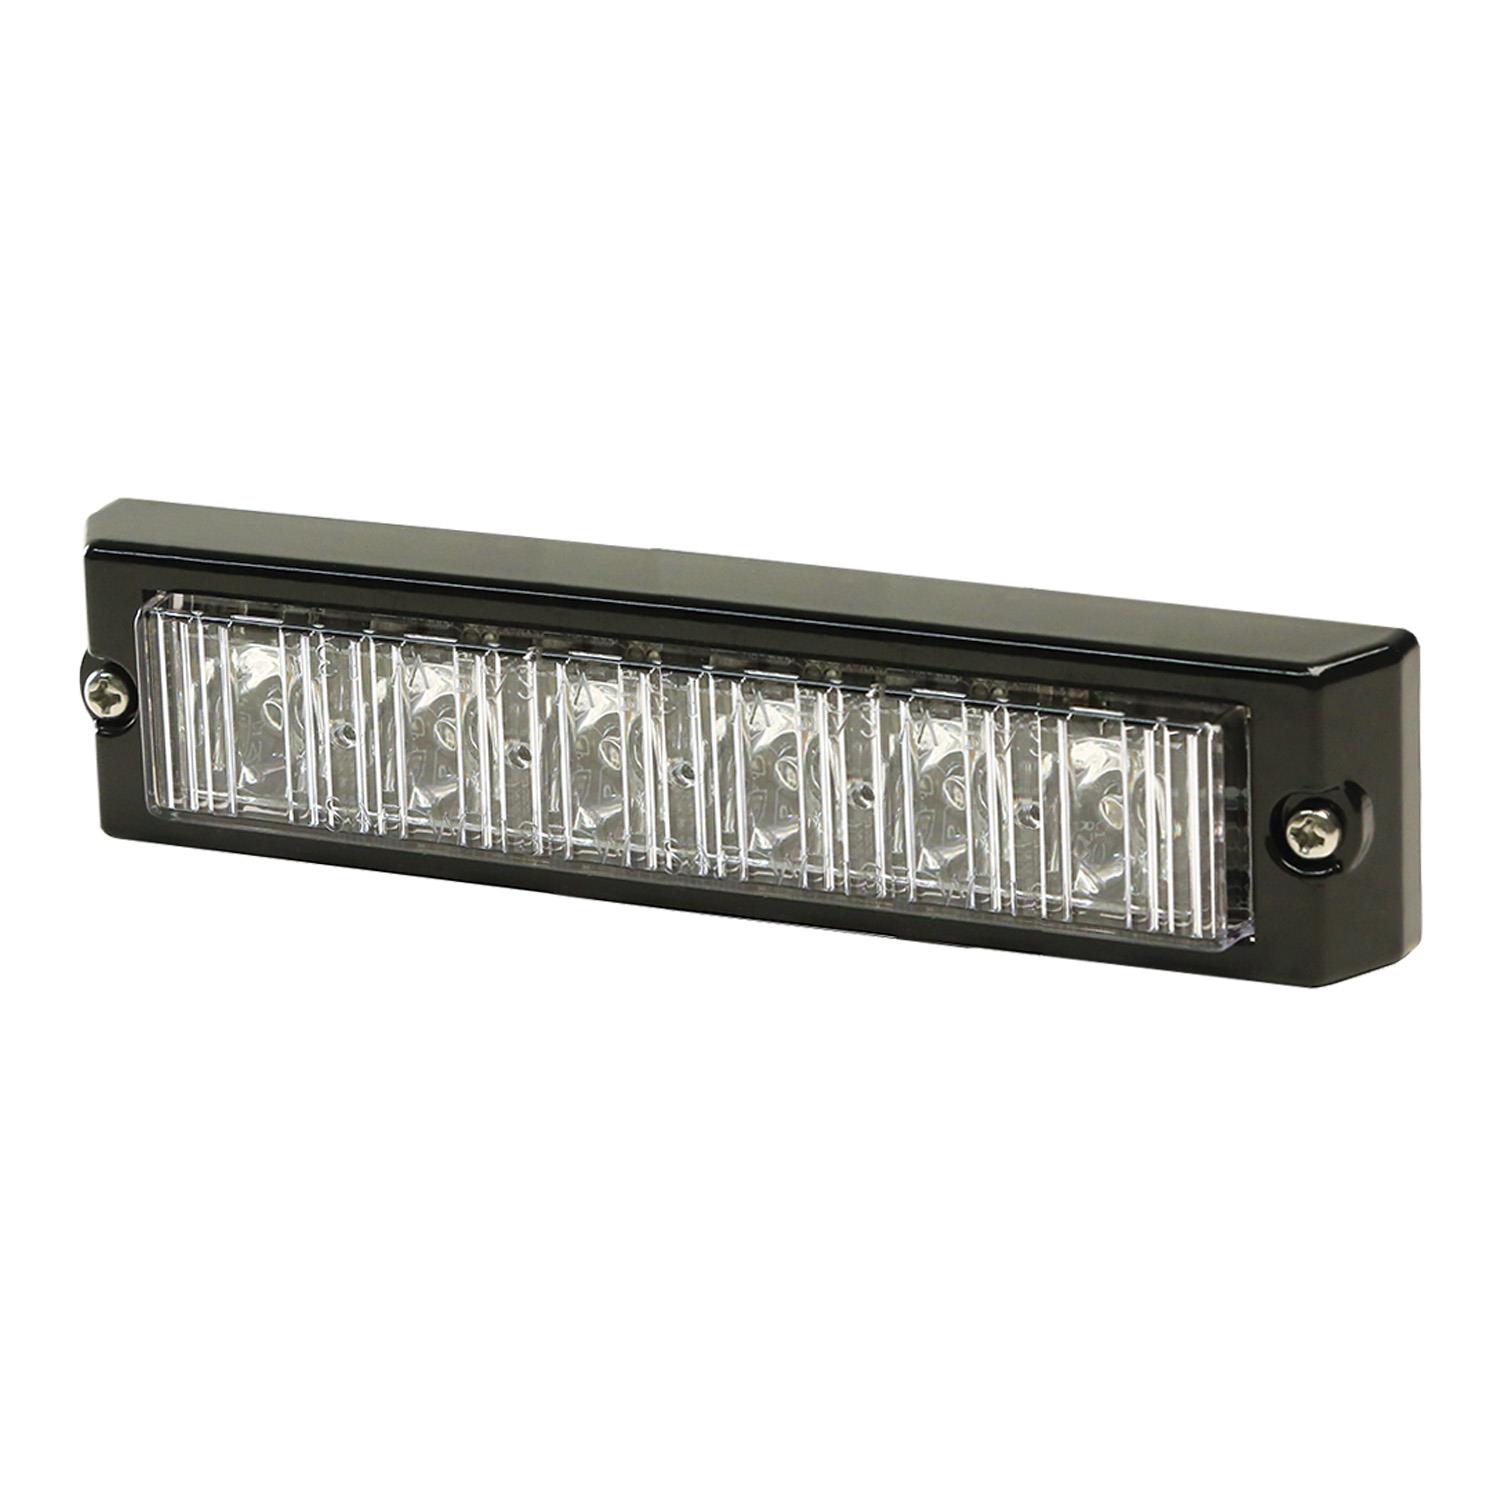 Directional 6 LED Warning Light, 21 Flash Patterns, Surface Mount